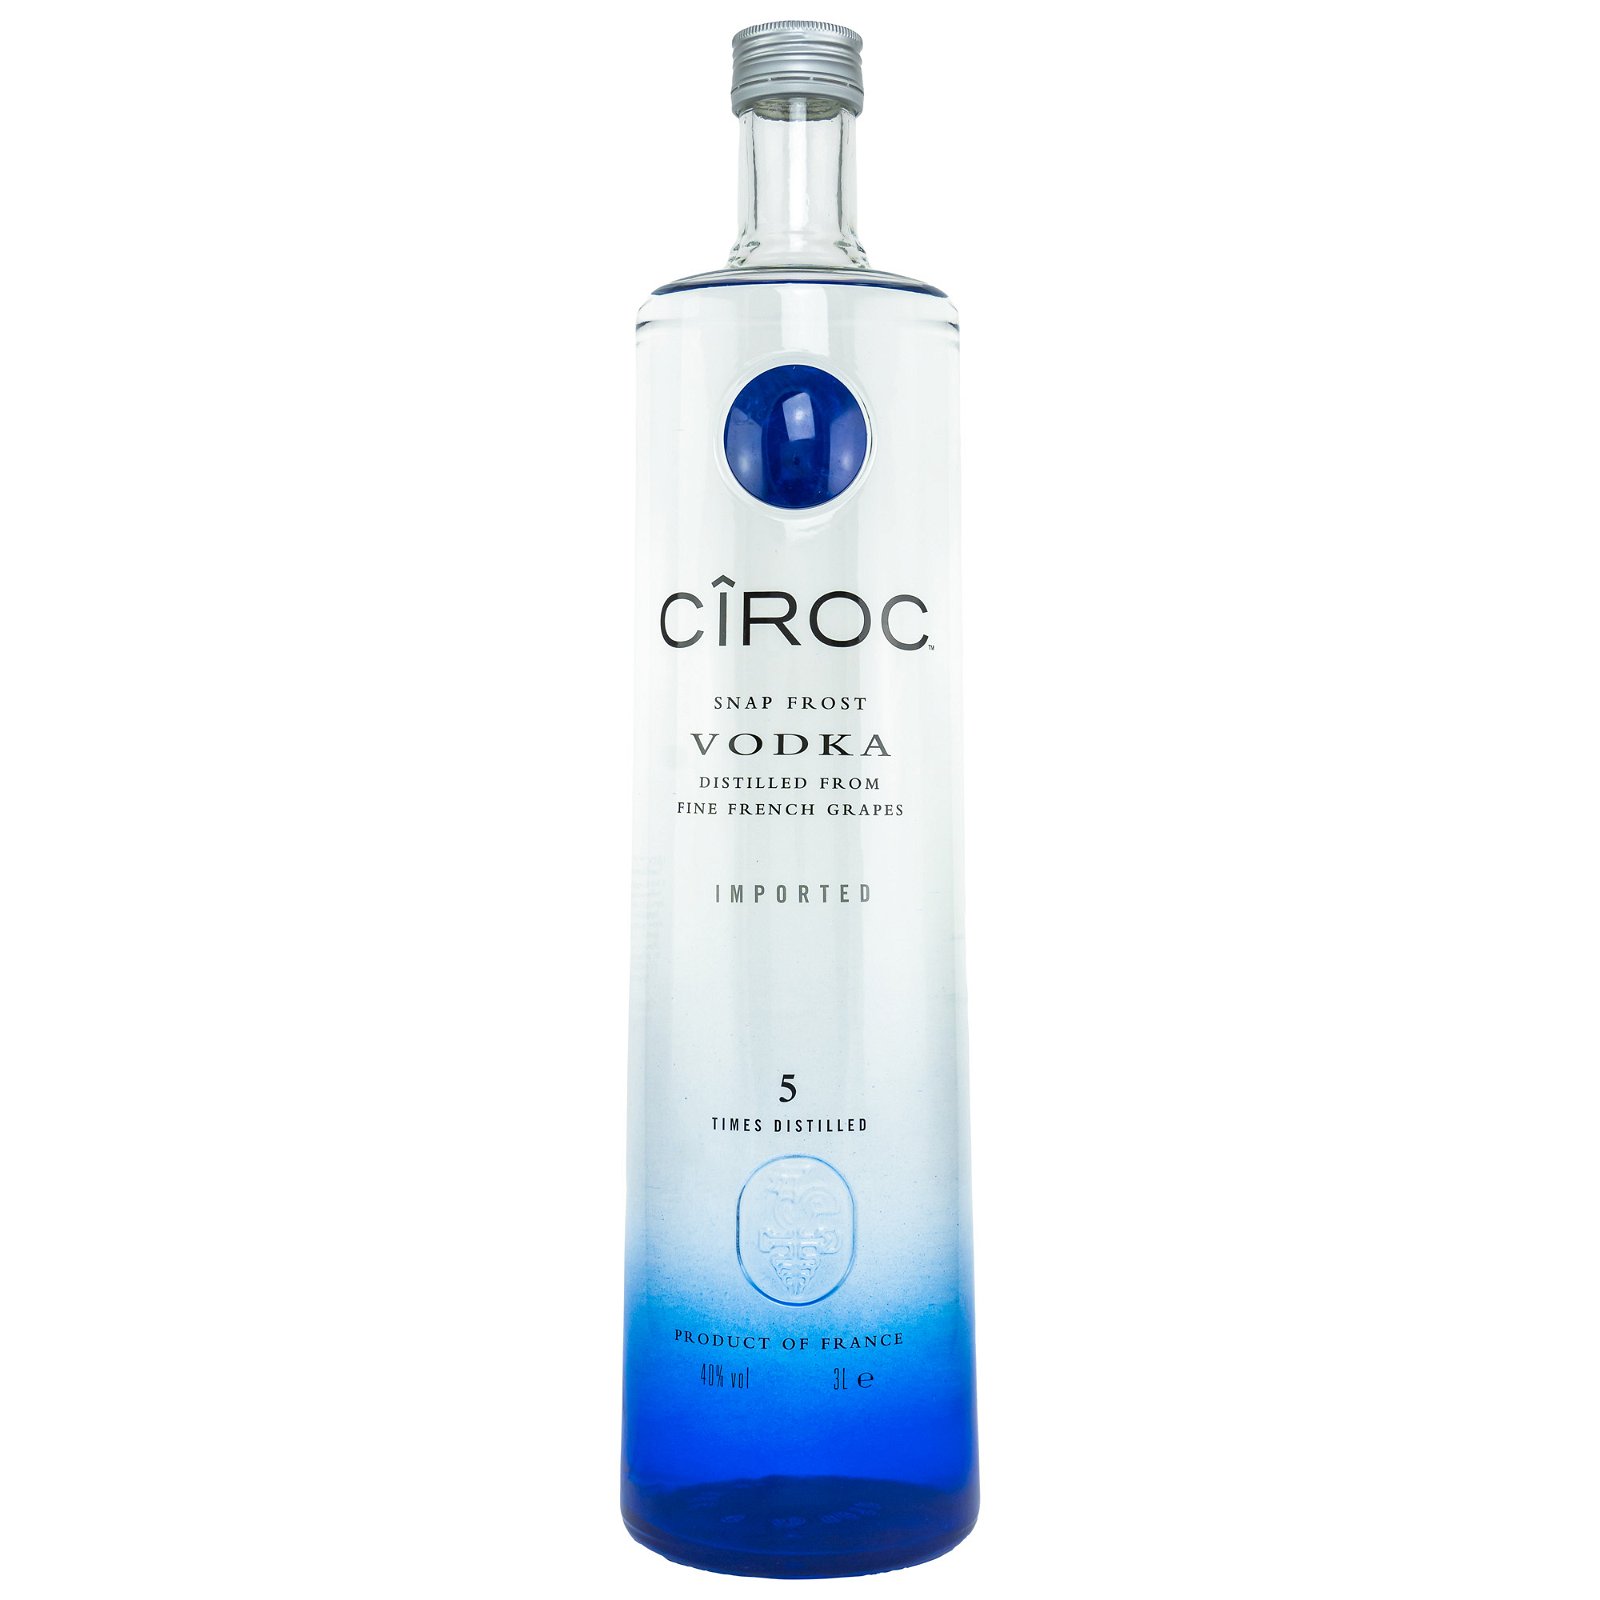 Ciroc Snap Frost Vodka (3 Liter)